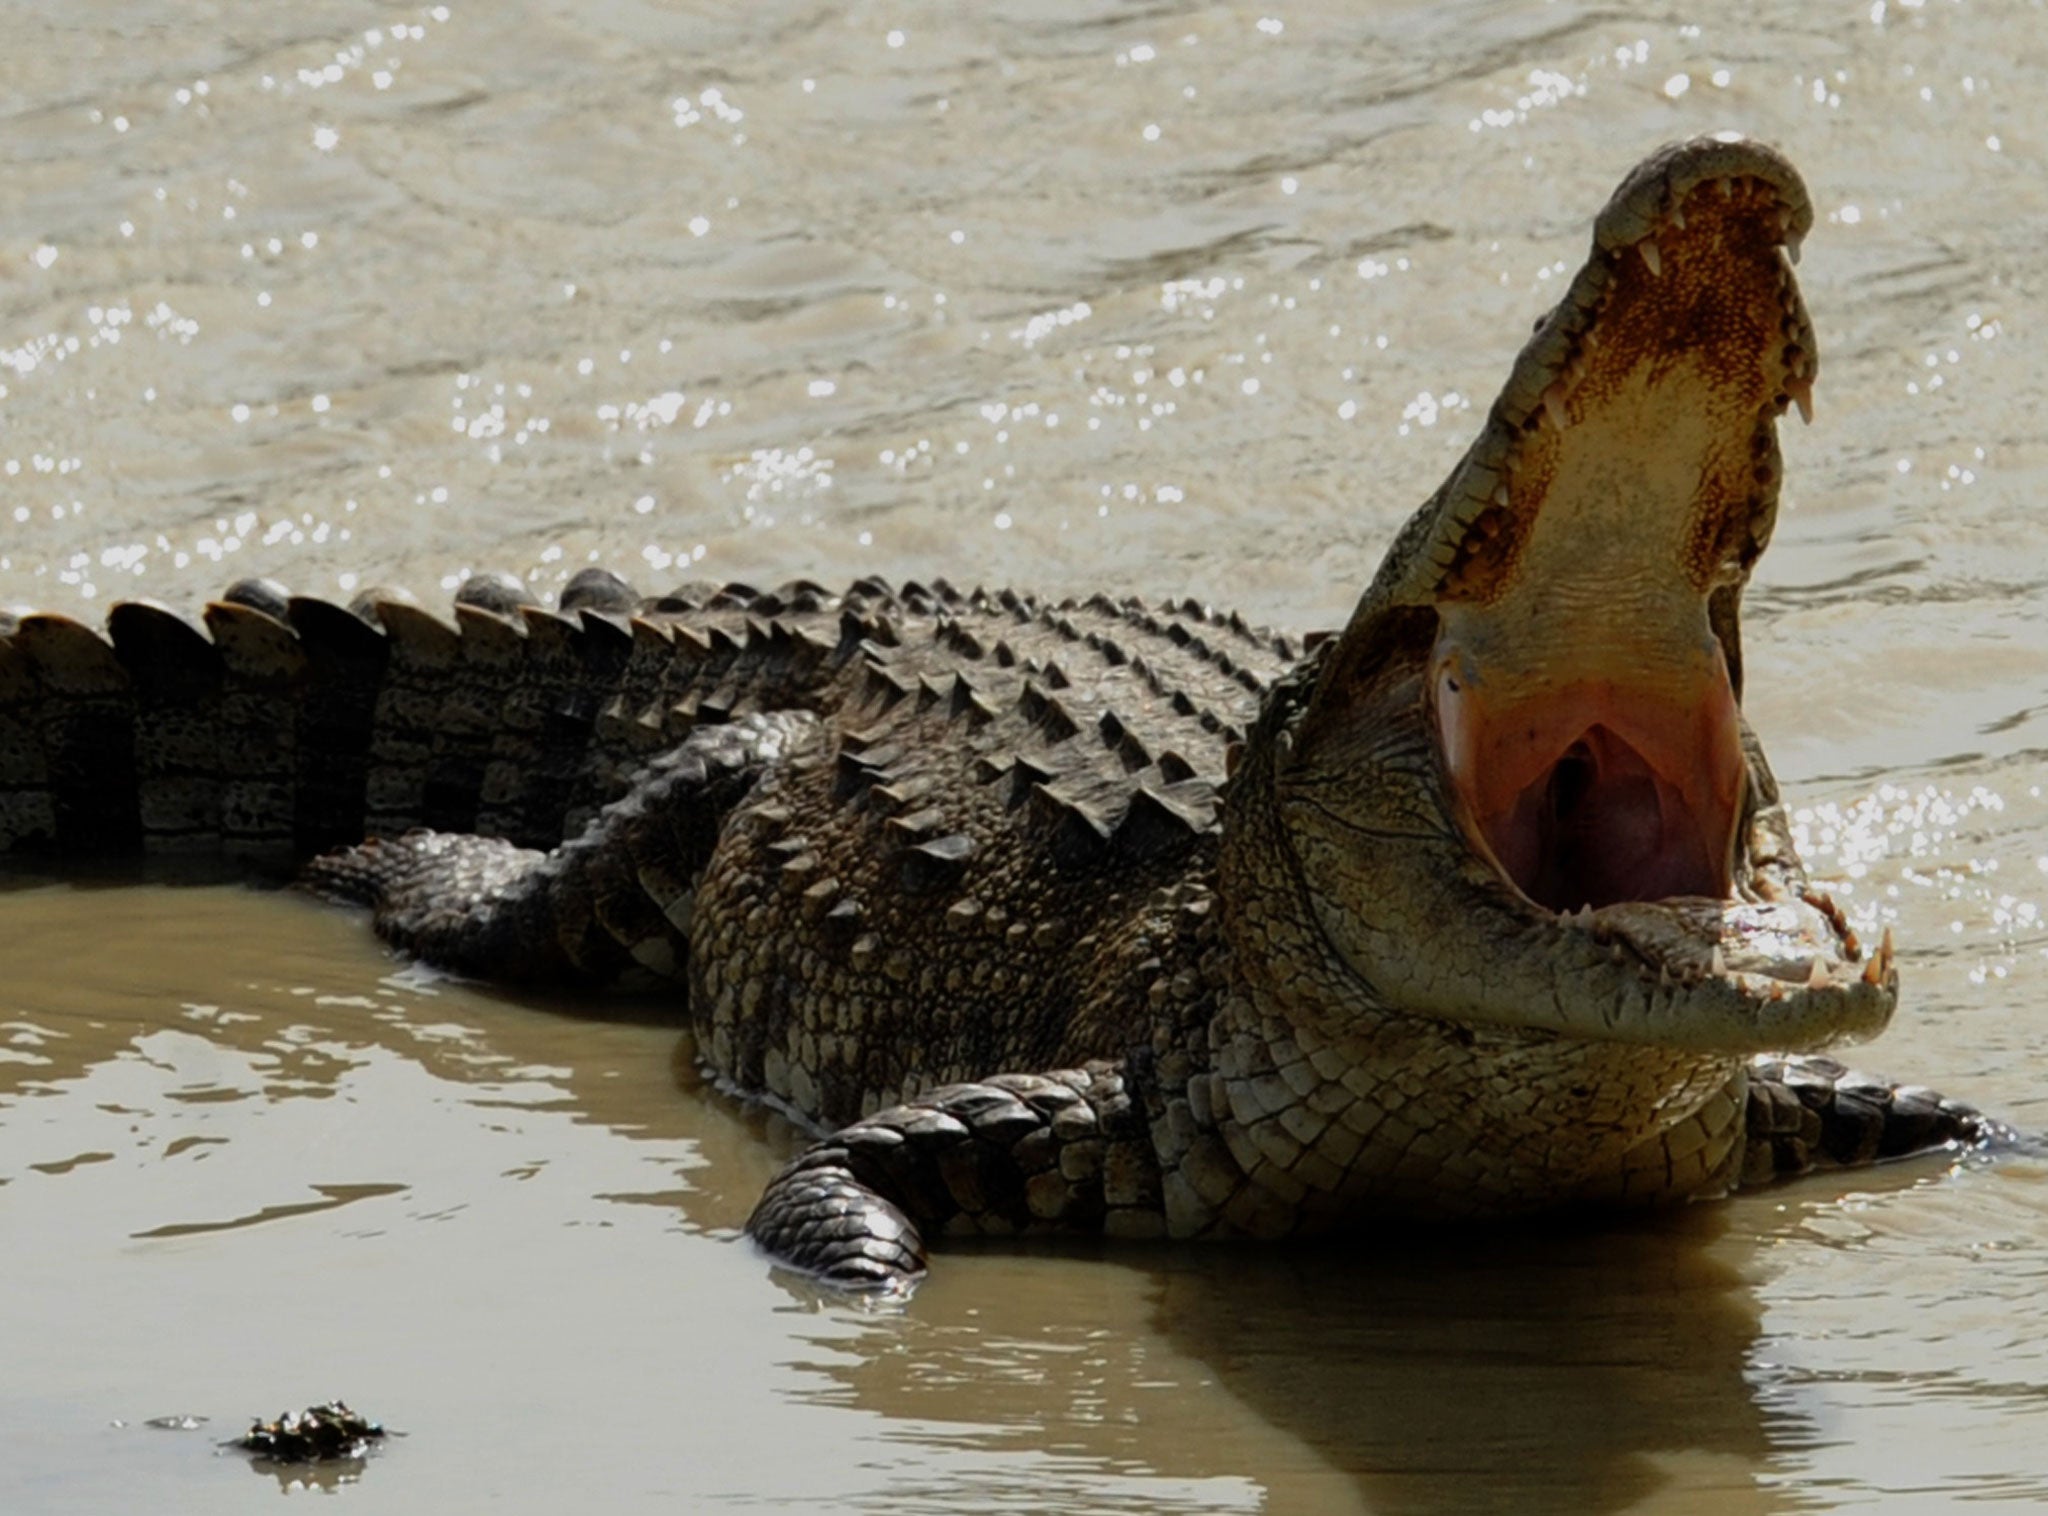 File image of a crocodile sunbathing on a river bank in the Yala National Park in Sri Lanka